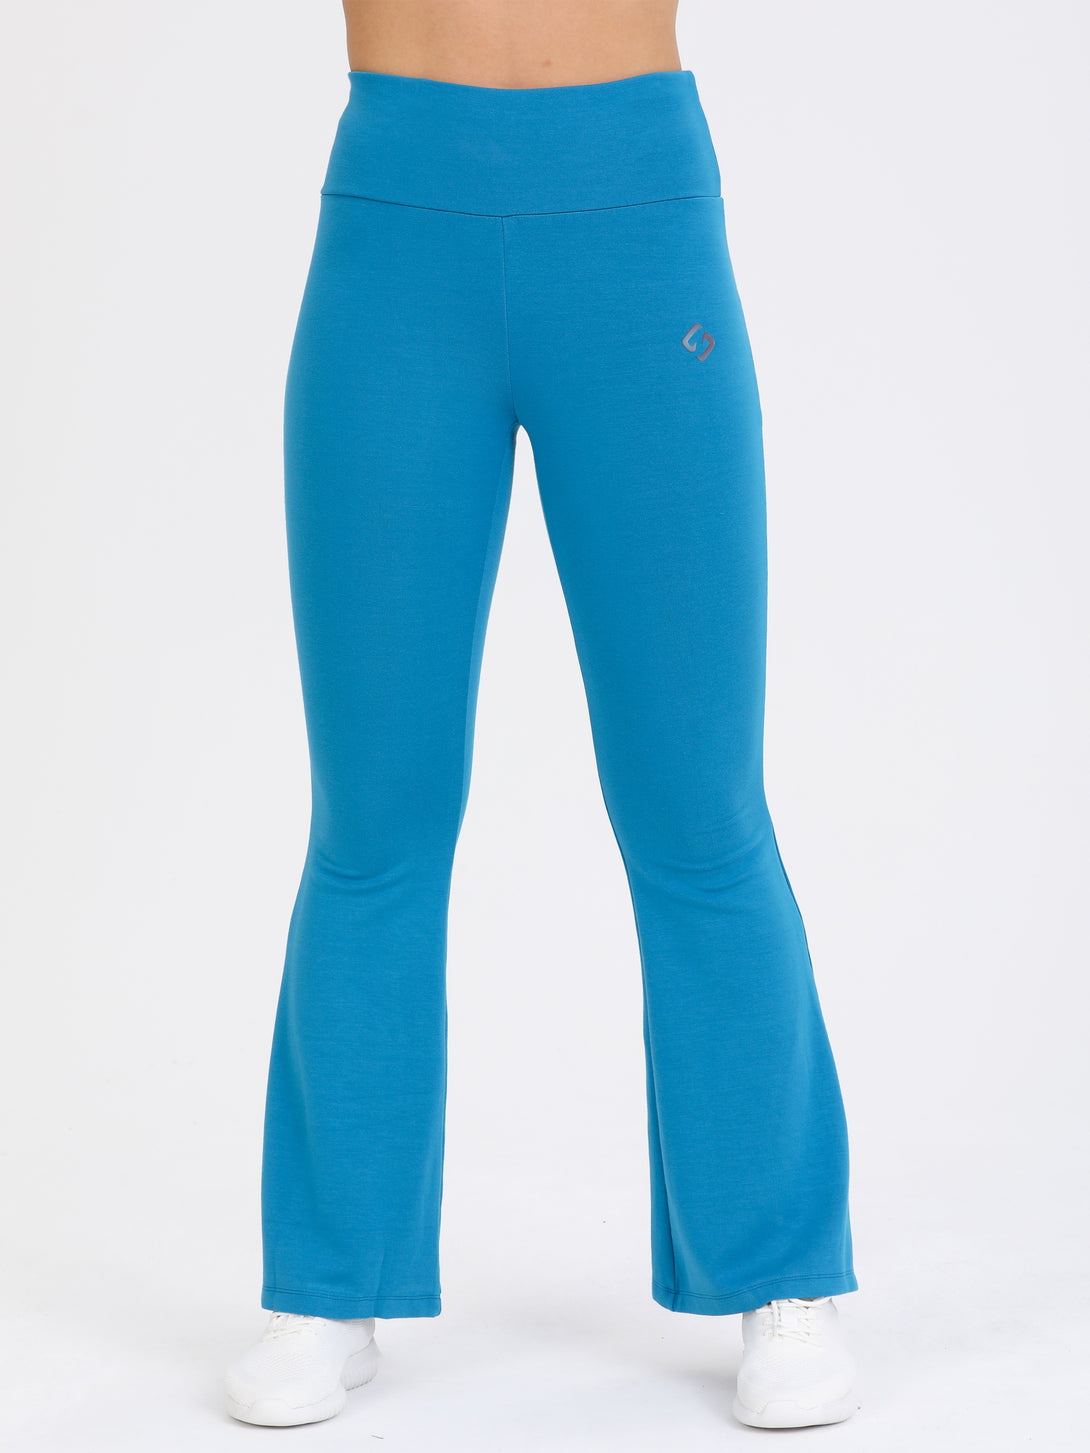 A Woman Wearing Saxony Blue Color Legacy Jersey Yoga Pants